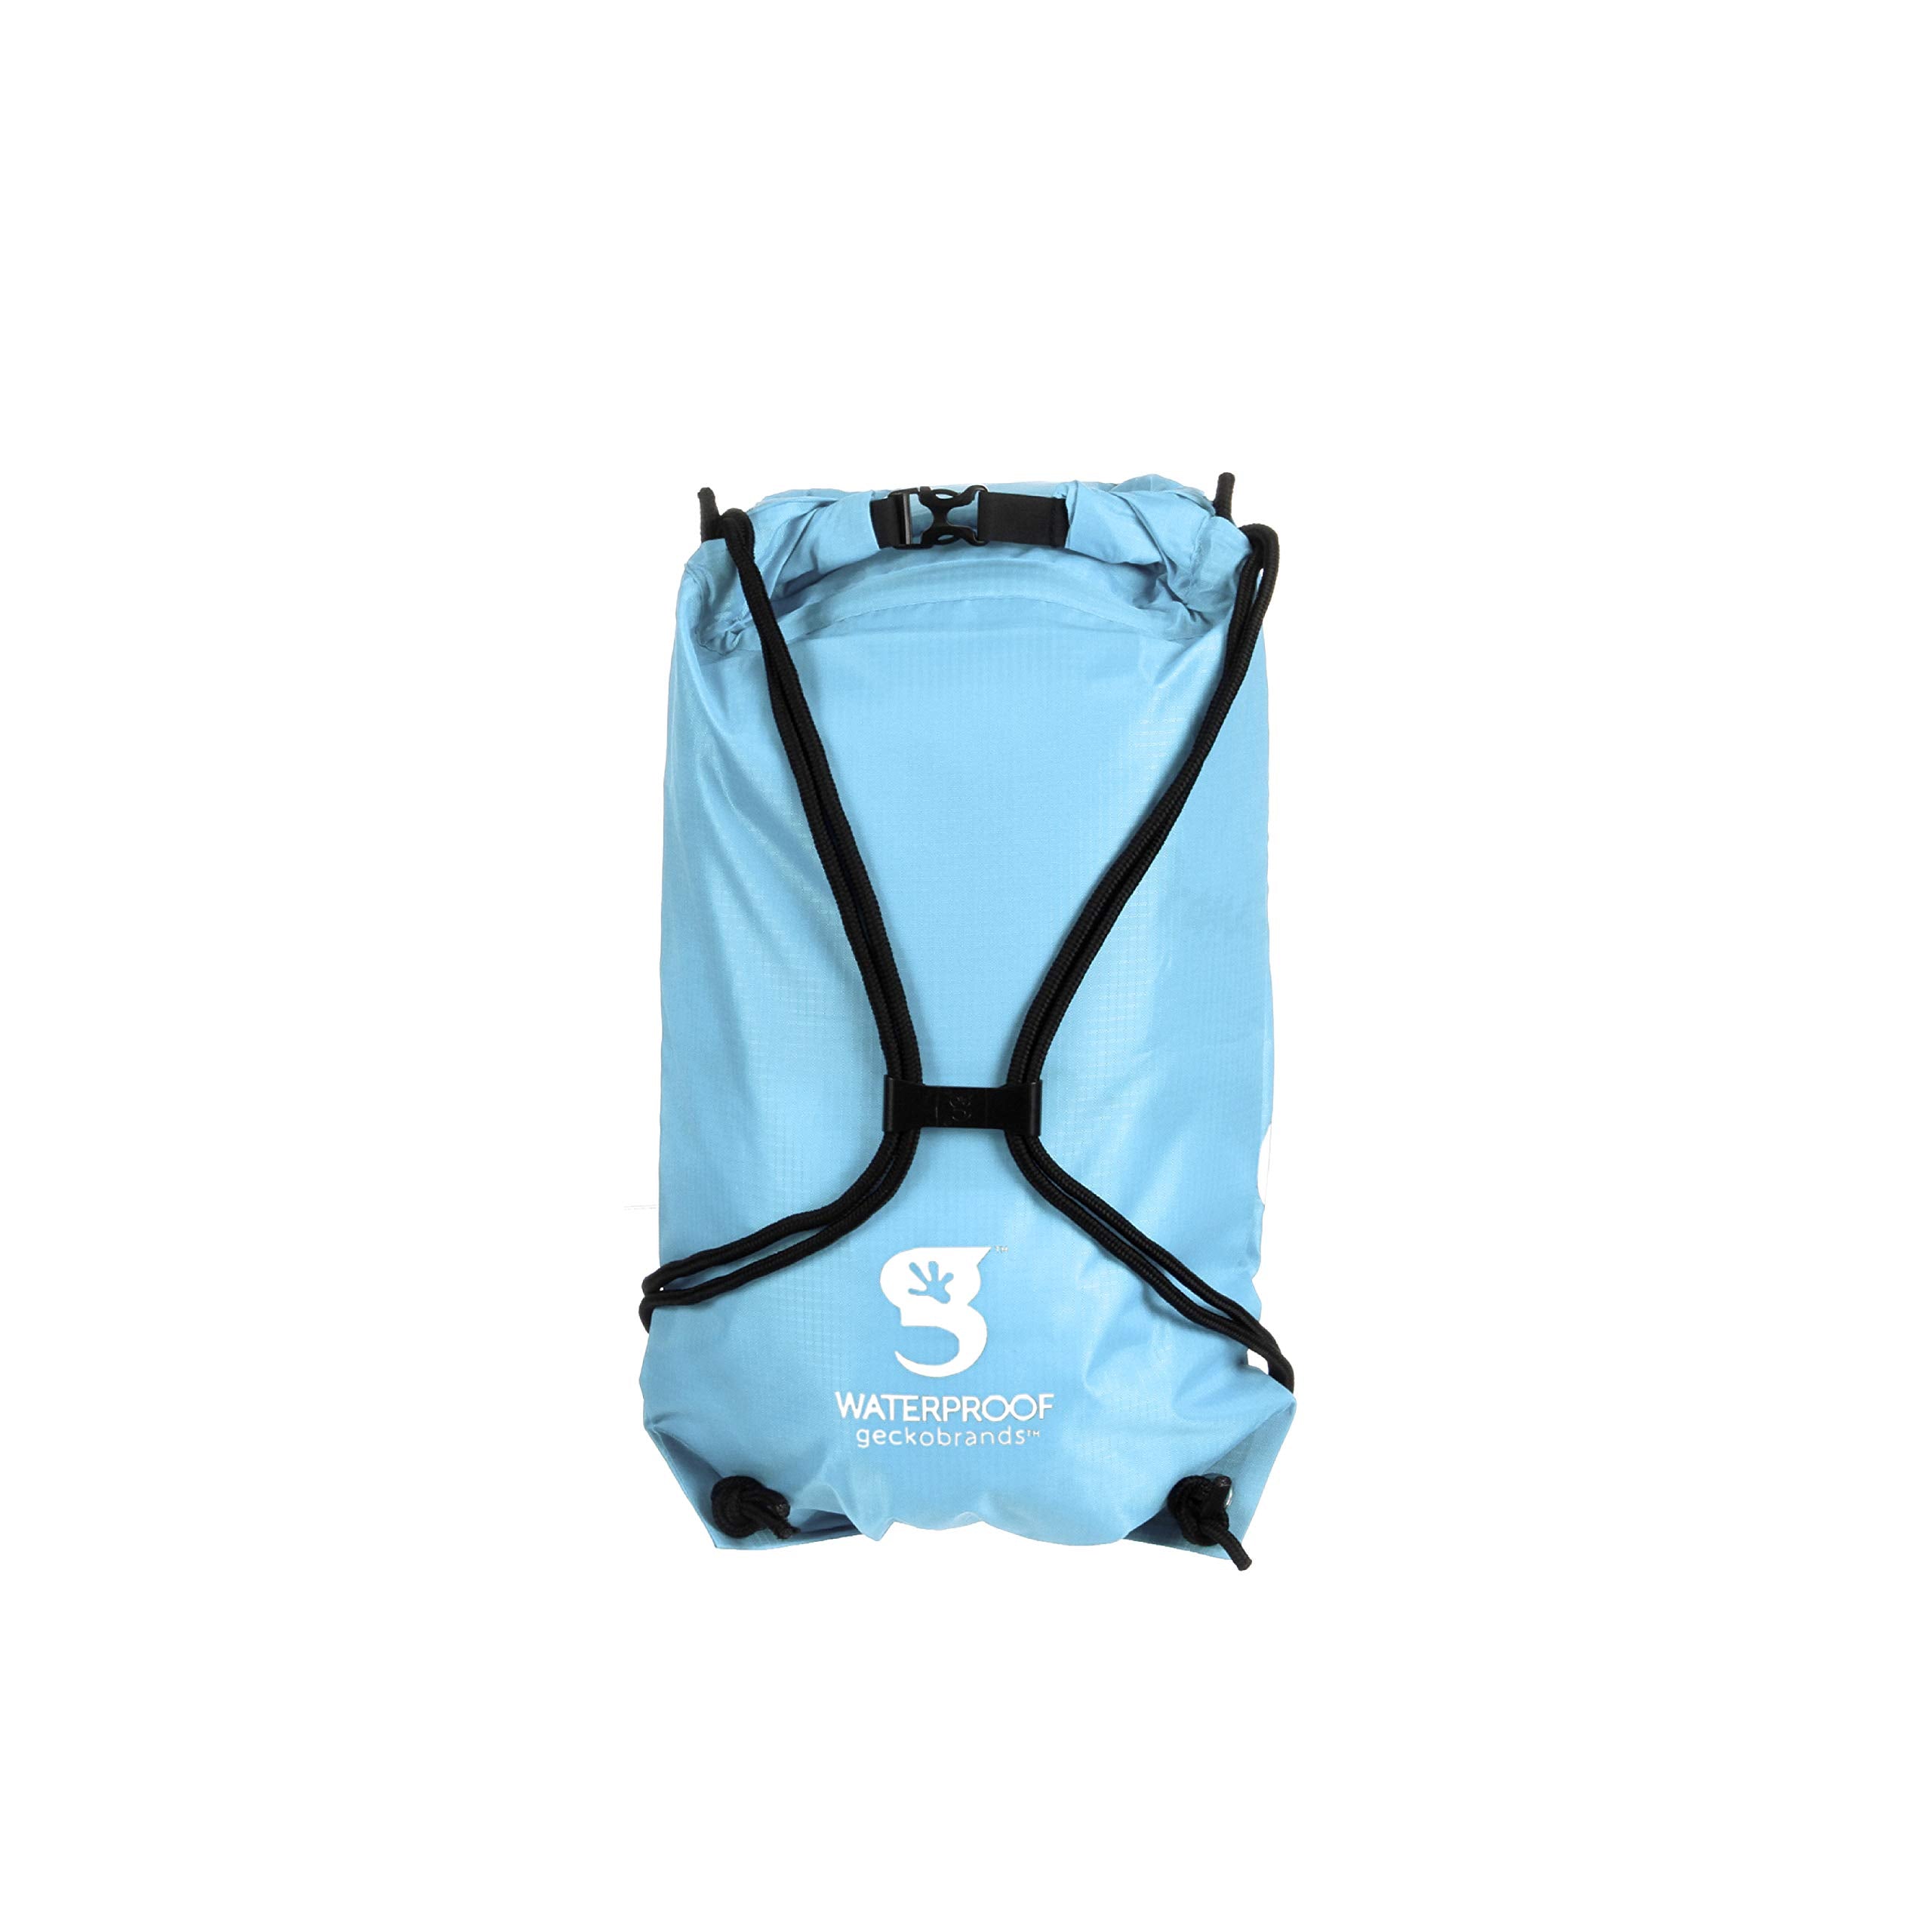 Are Drawstring Bags Waterproof?